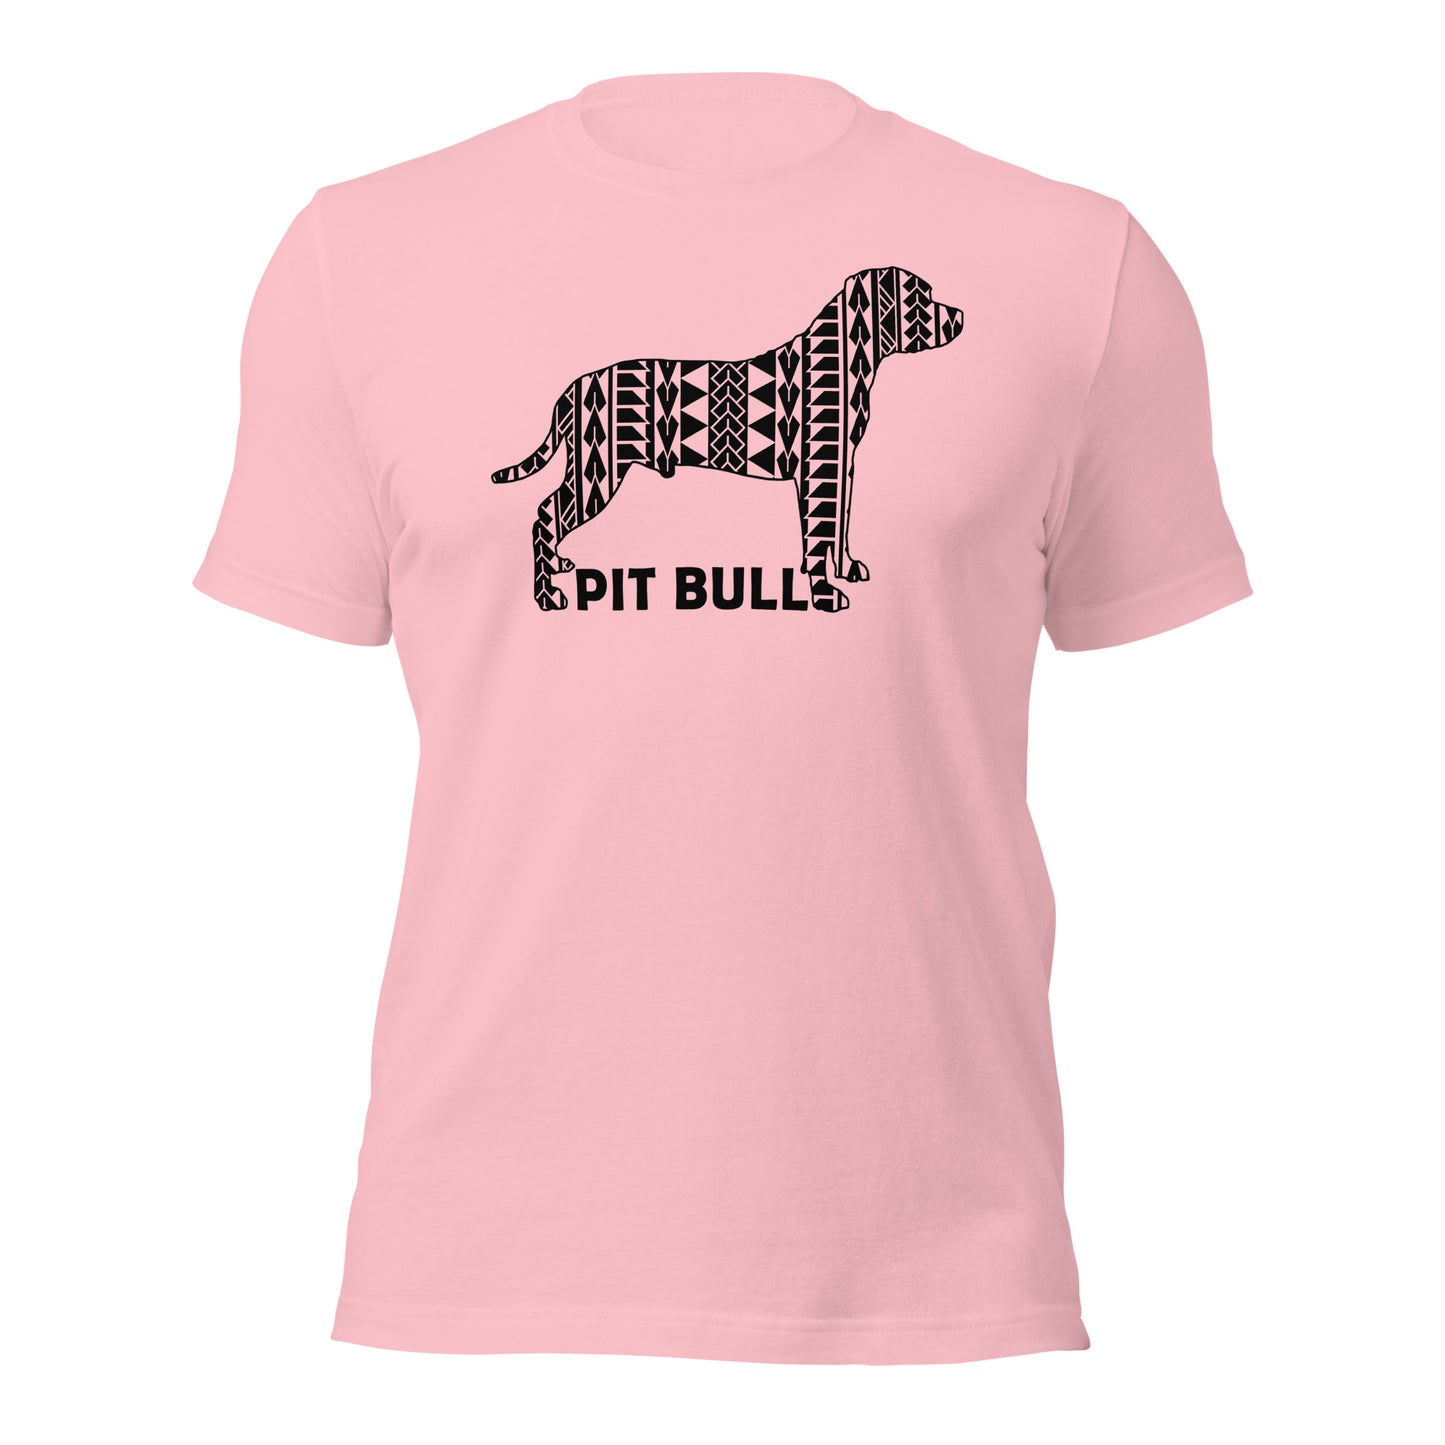 Pit Bull Polynesian t-shirt pink by Dog Artistry.